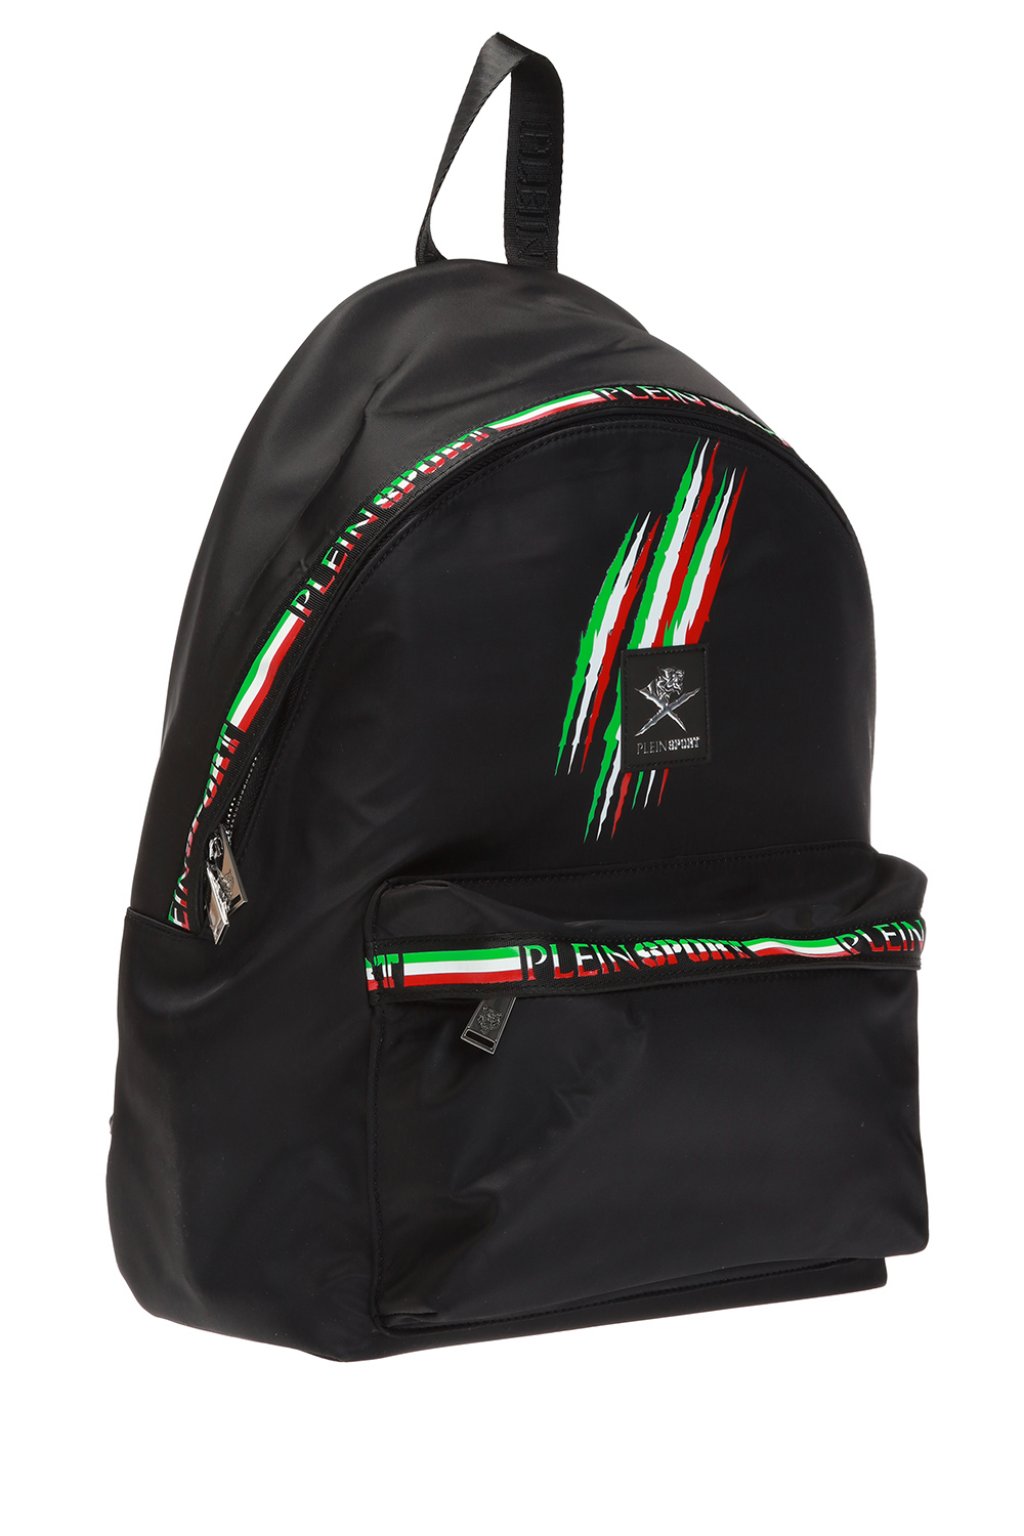 plein sport backpack